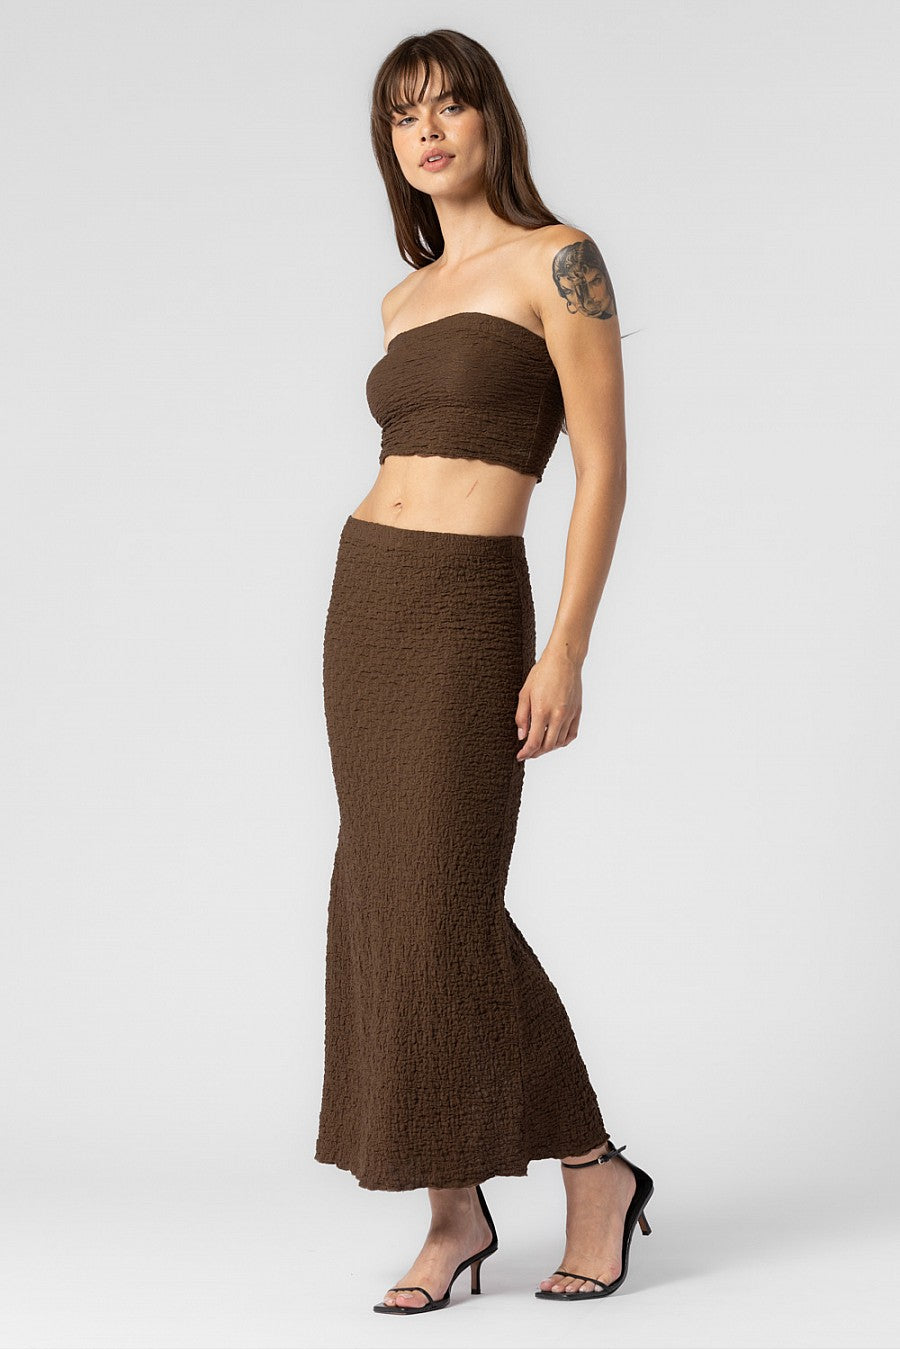 Brown midi skirt with back slit. 